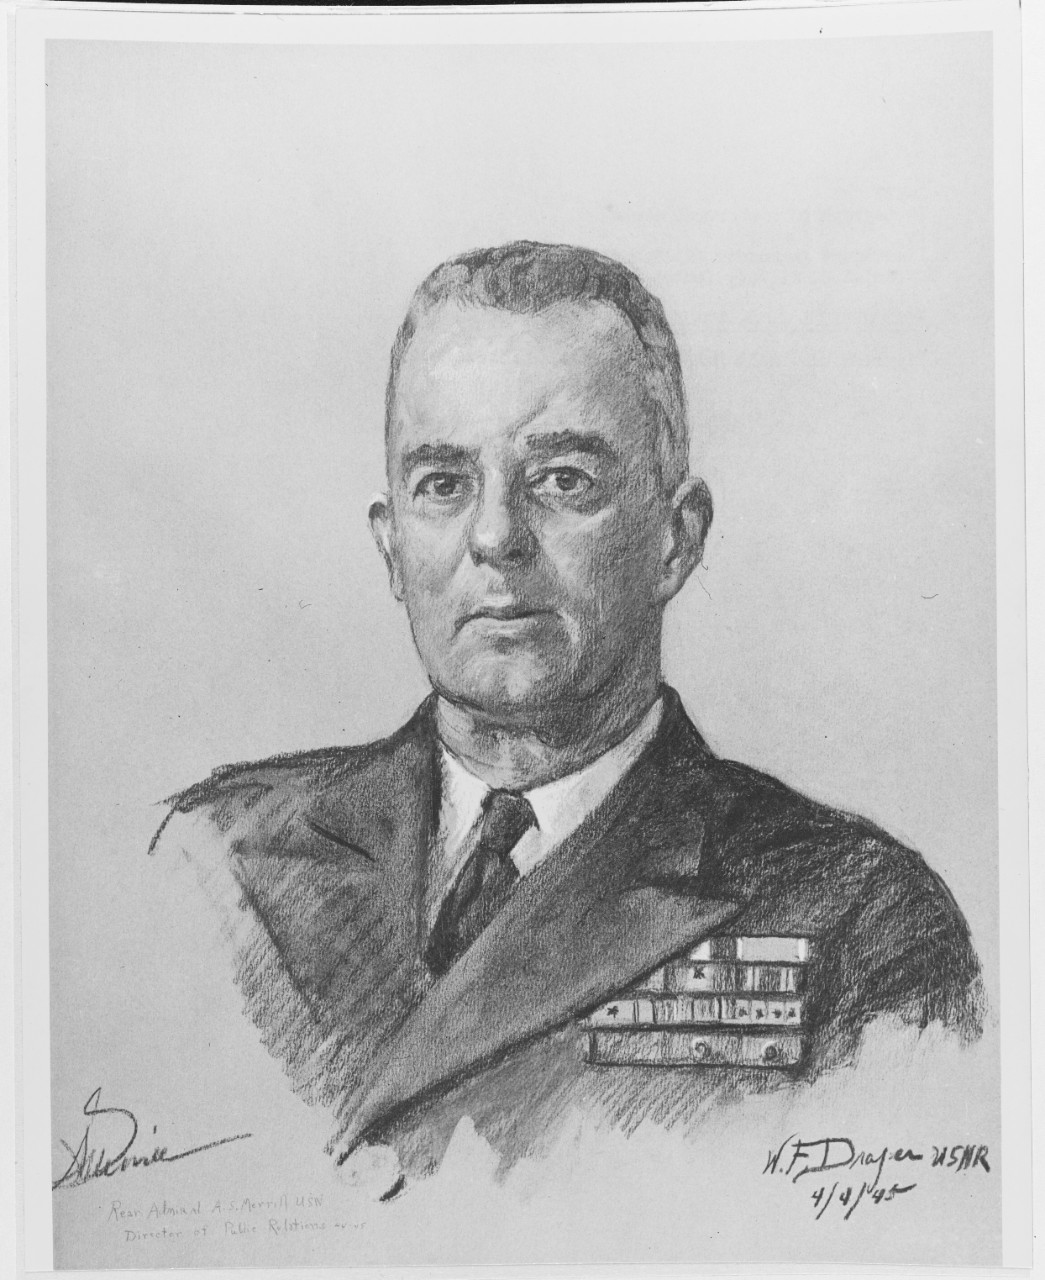 Rear Admiral Aaron Stanton Merrill